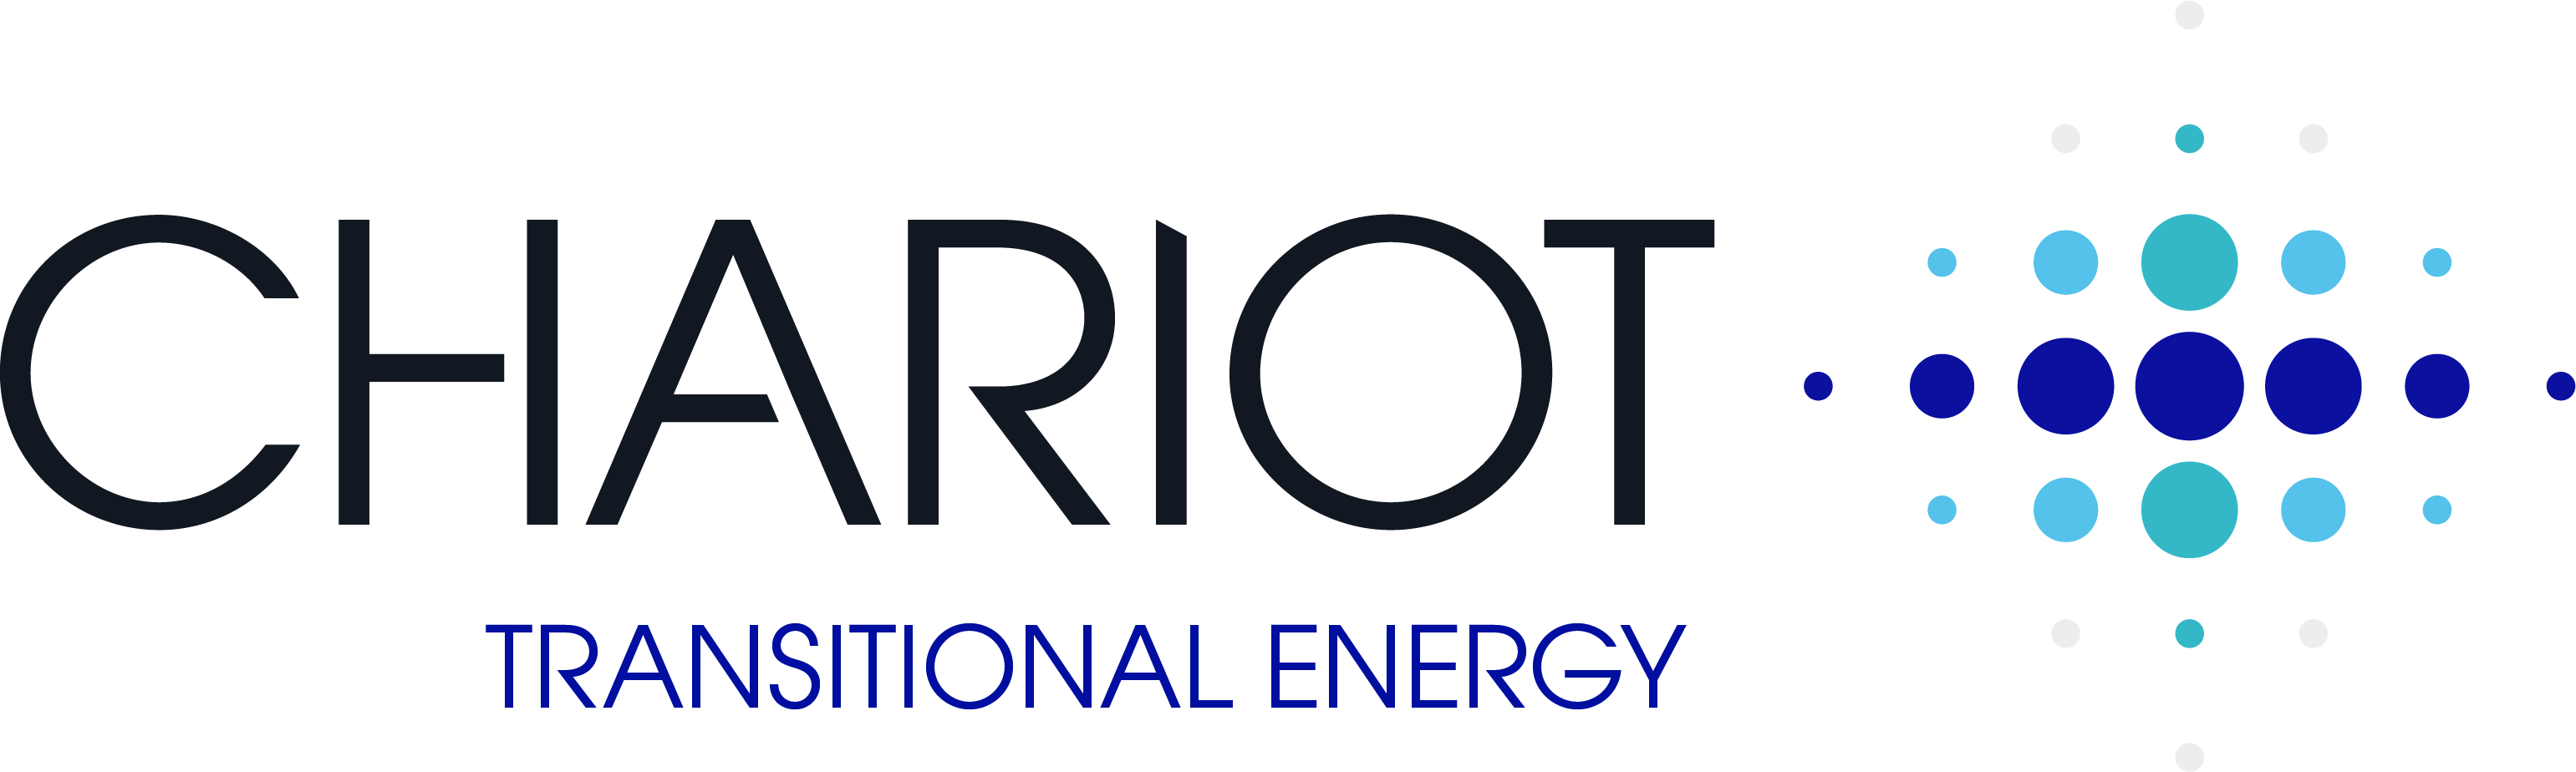 Chariot_Energy